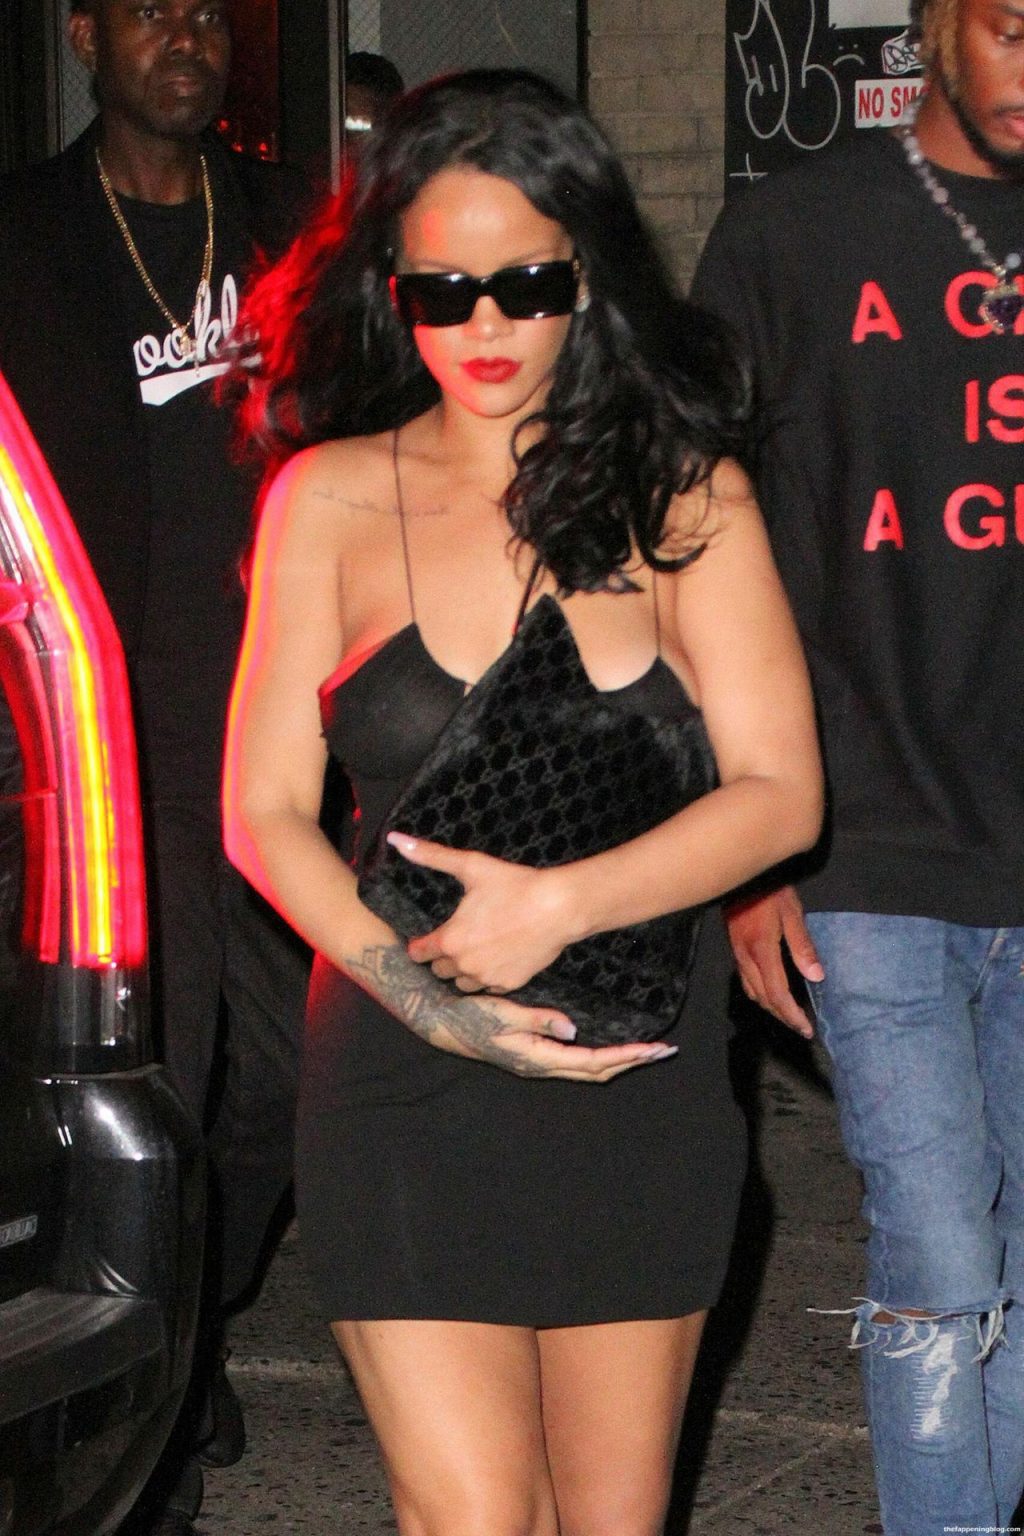 Braless Rihanna Wears a Skimpy Black Dress as She is Seen Leaving a NYC Club (19 Photos)